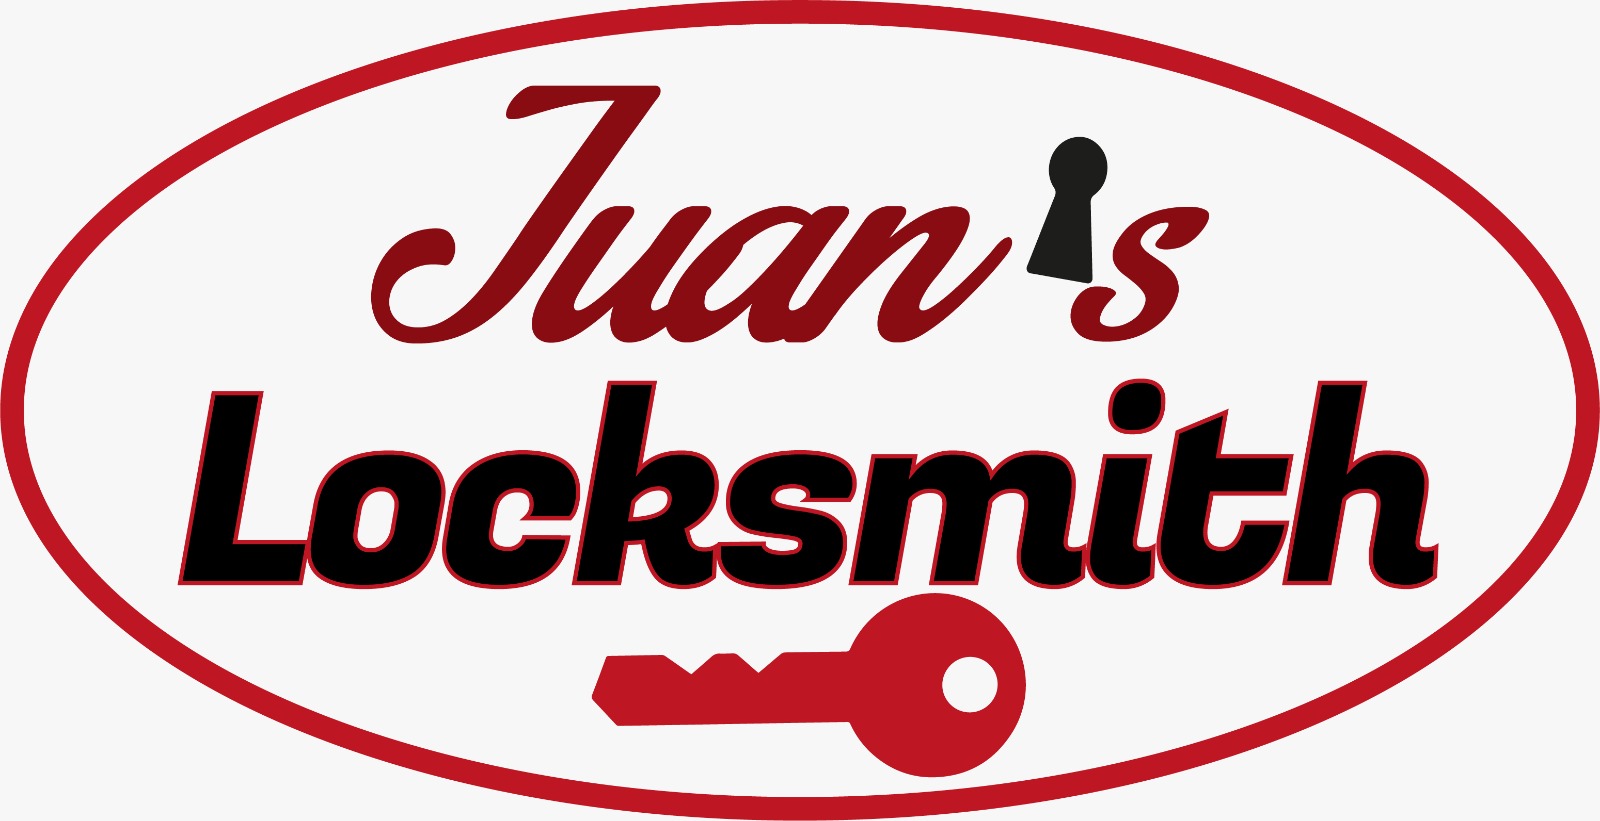 Juan's Locksmith